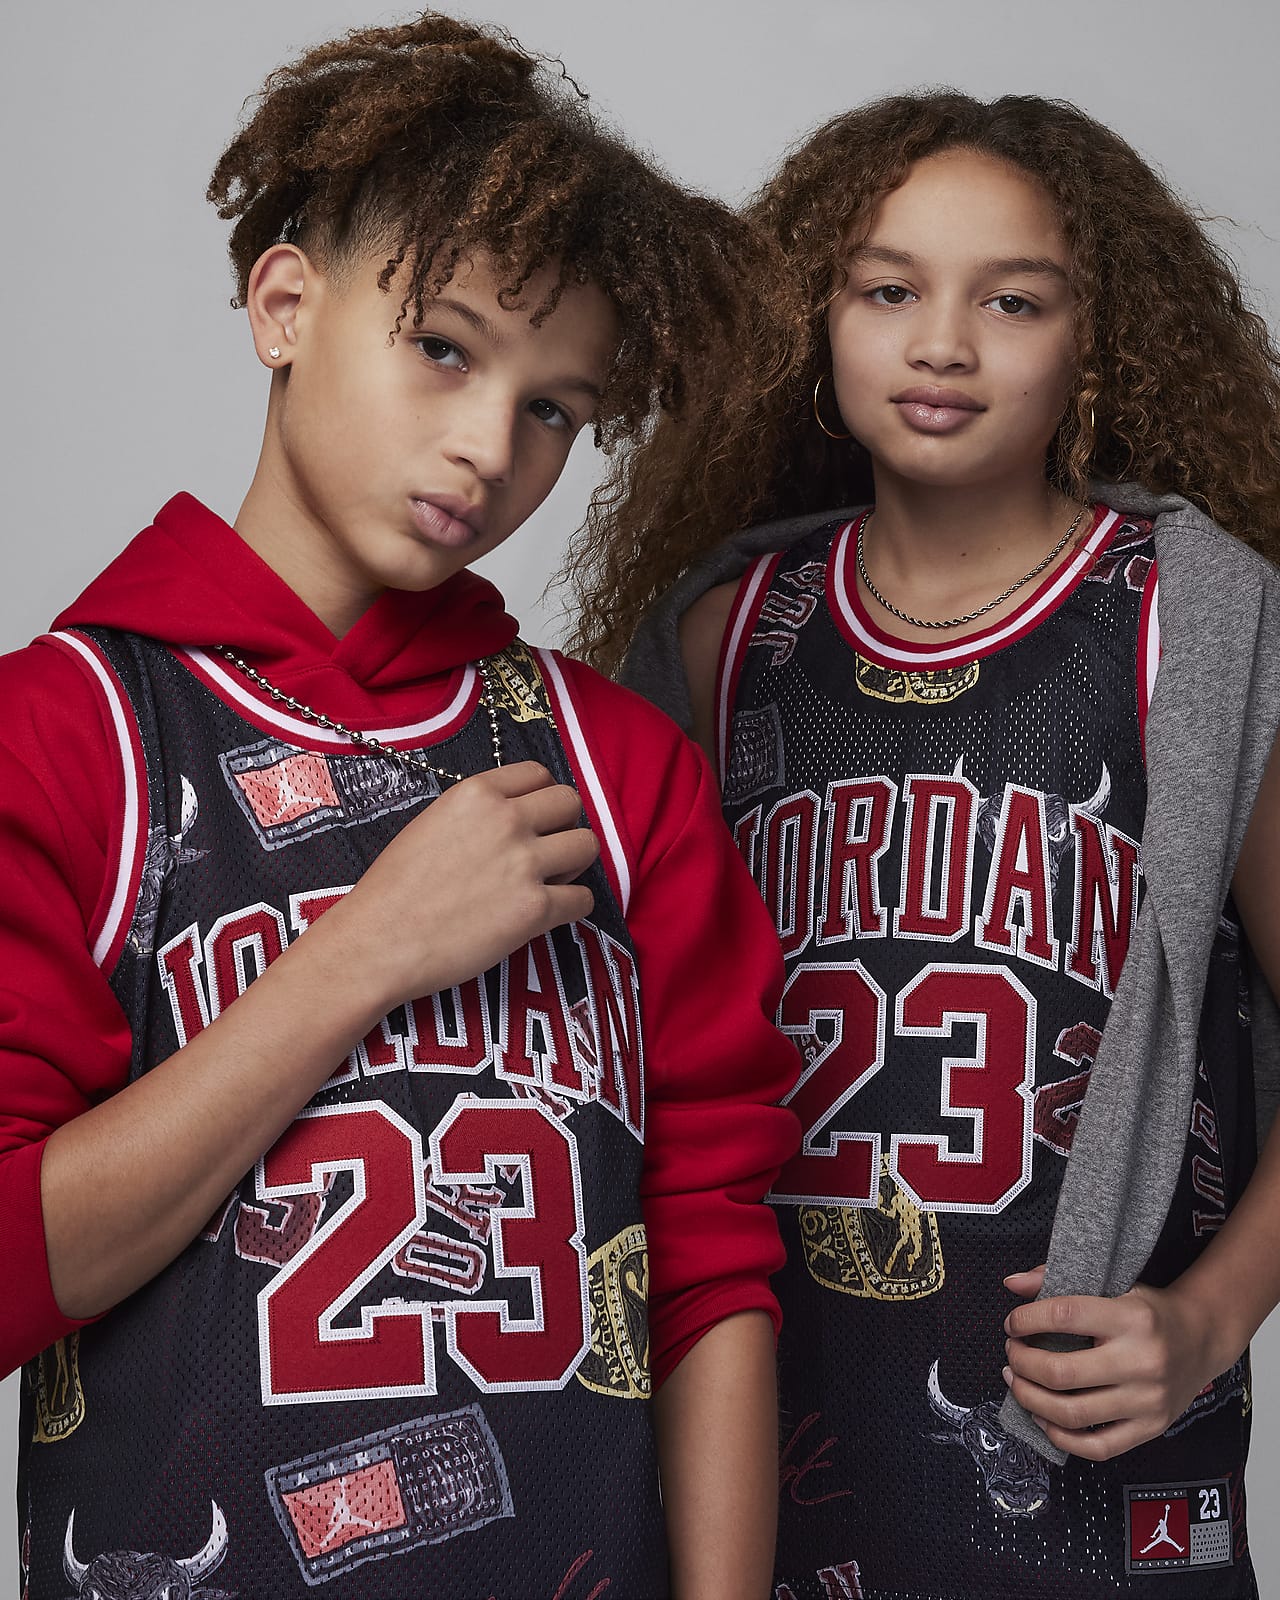 Jordan23 Big Kids' Printed Jersey.